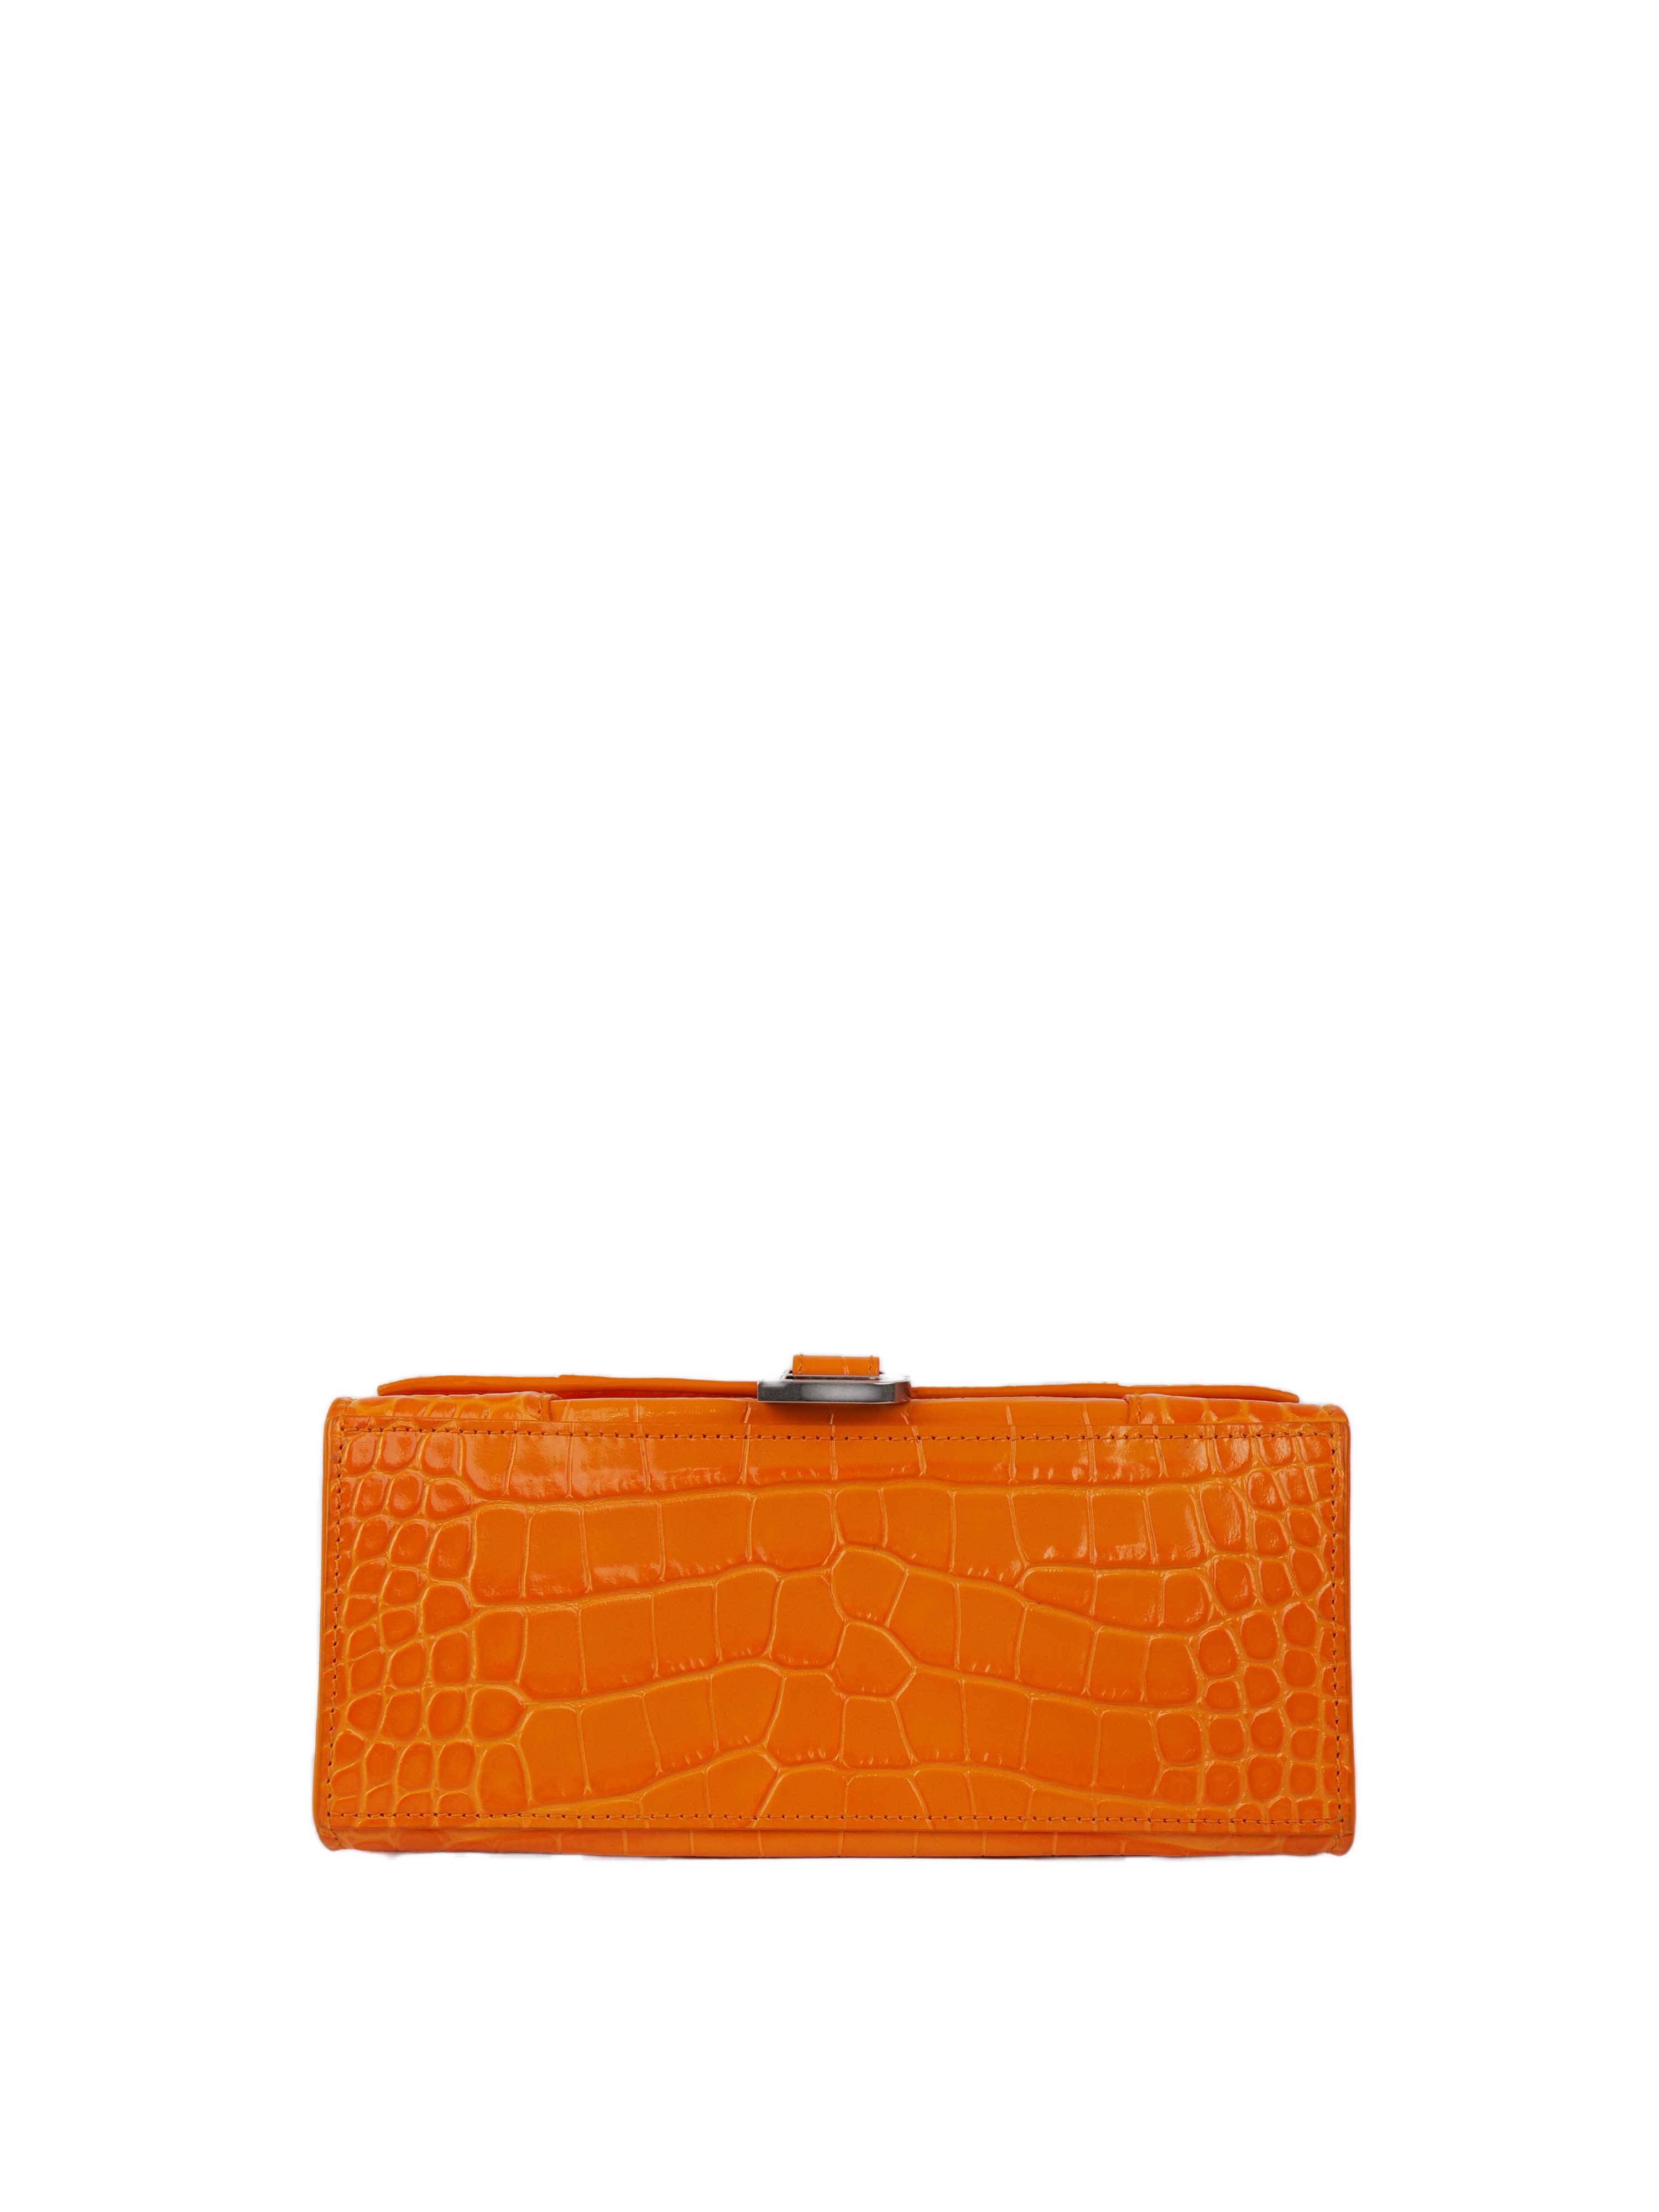 Balenciaga Small Orange Hourglass Bag.